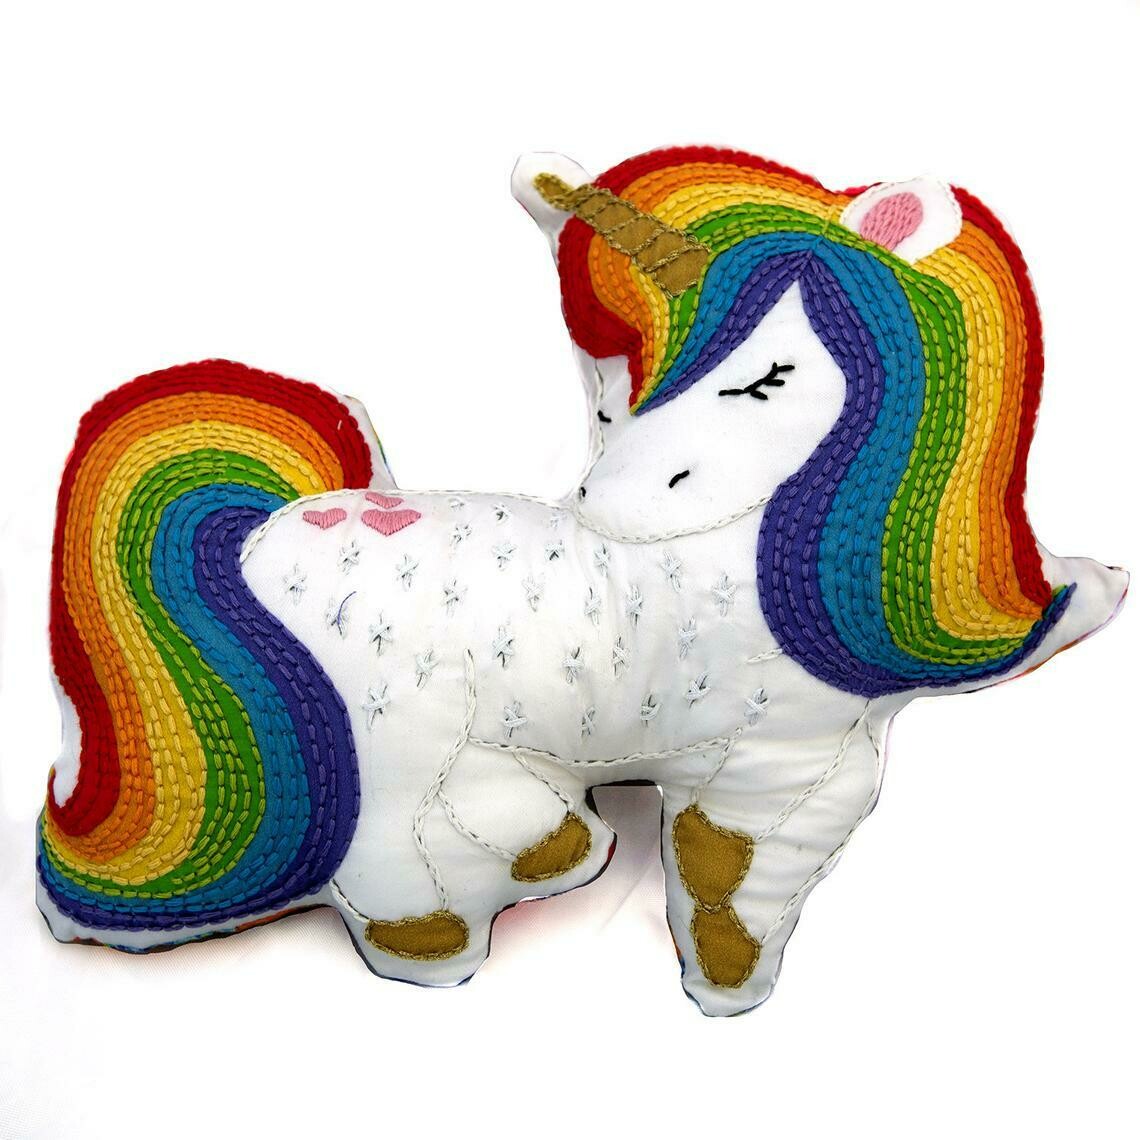 SALE - Crafty Creatures Embroidery Kit - Unicorn